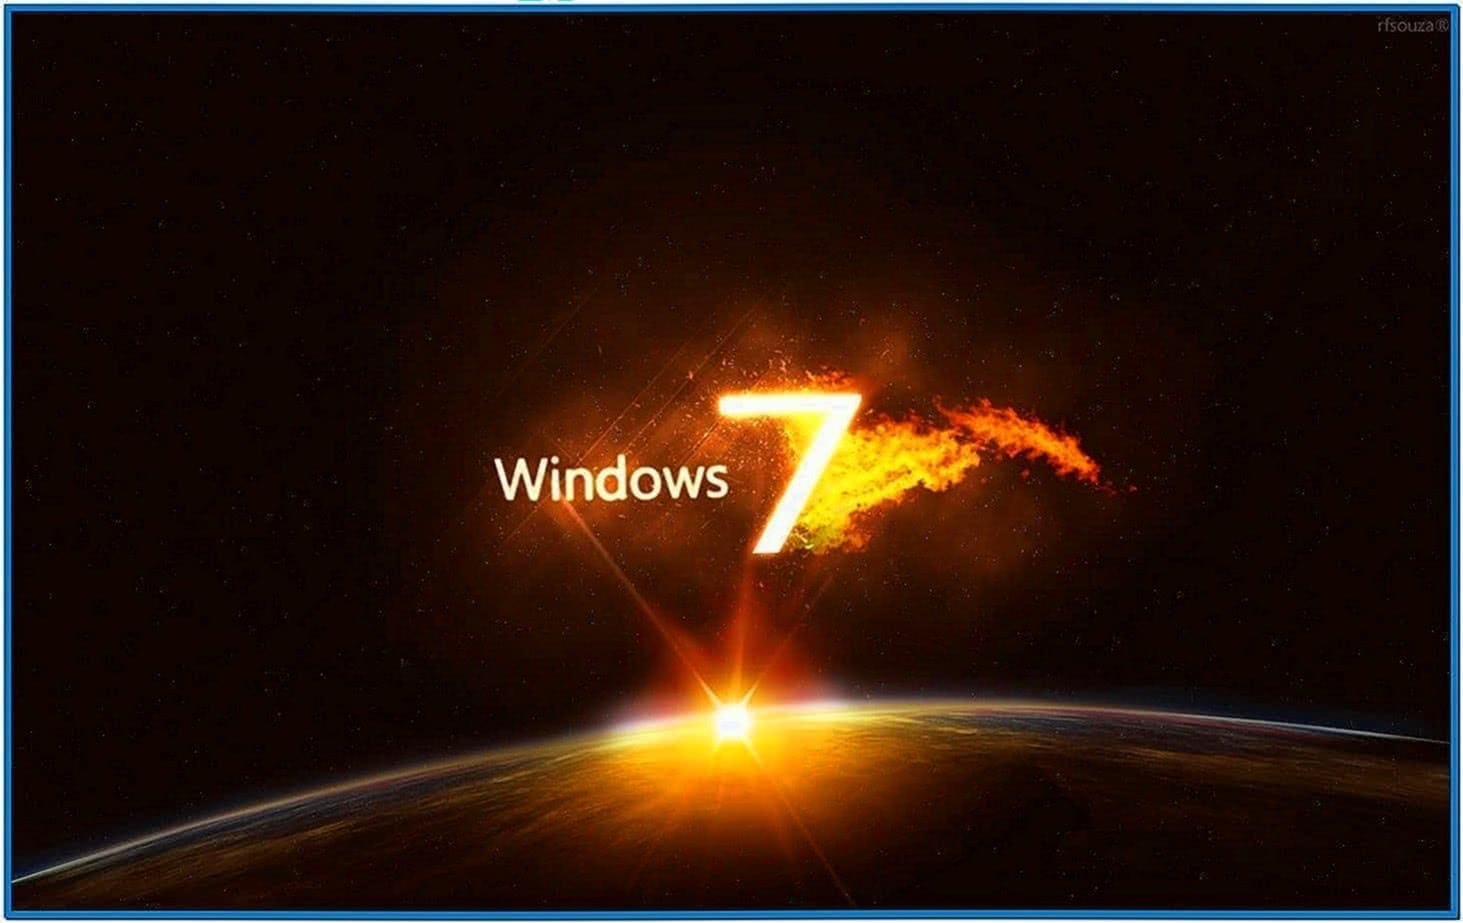 windows 7 ultimate 64bit free download